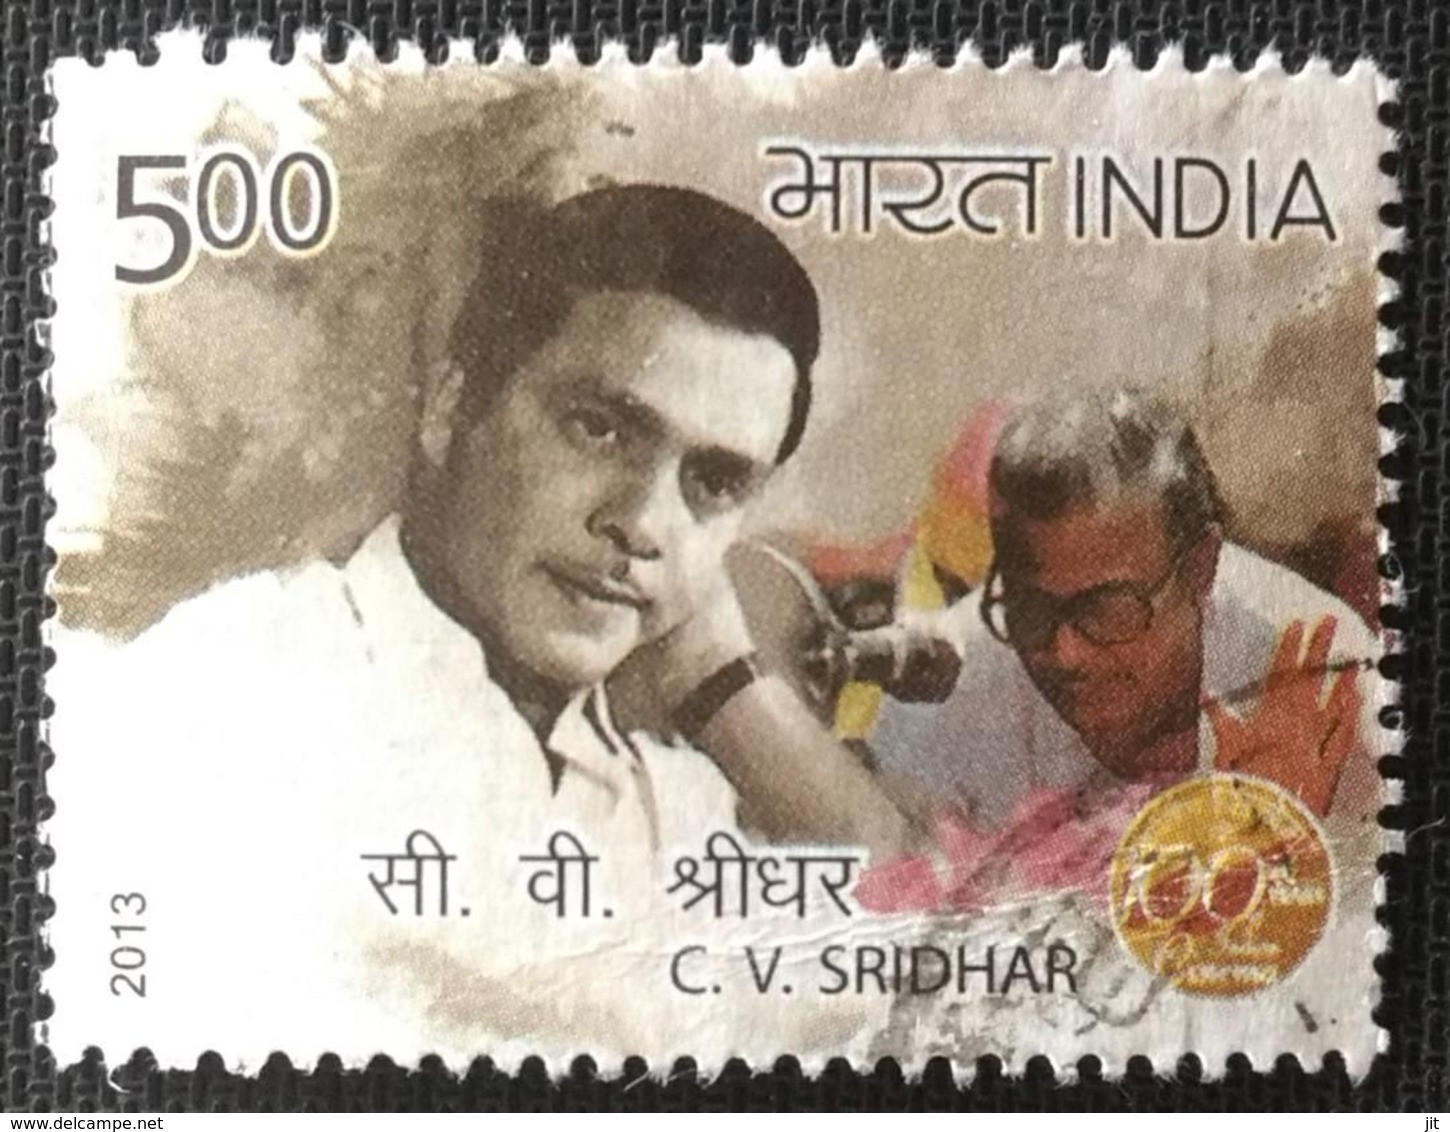 INDIA 2013 USED STAMP 100 YEARS OF INDIAN CINEMA (C.V.SRIDHAR) - Gebruikt